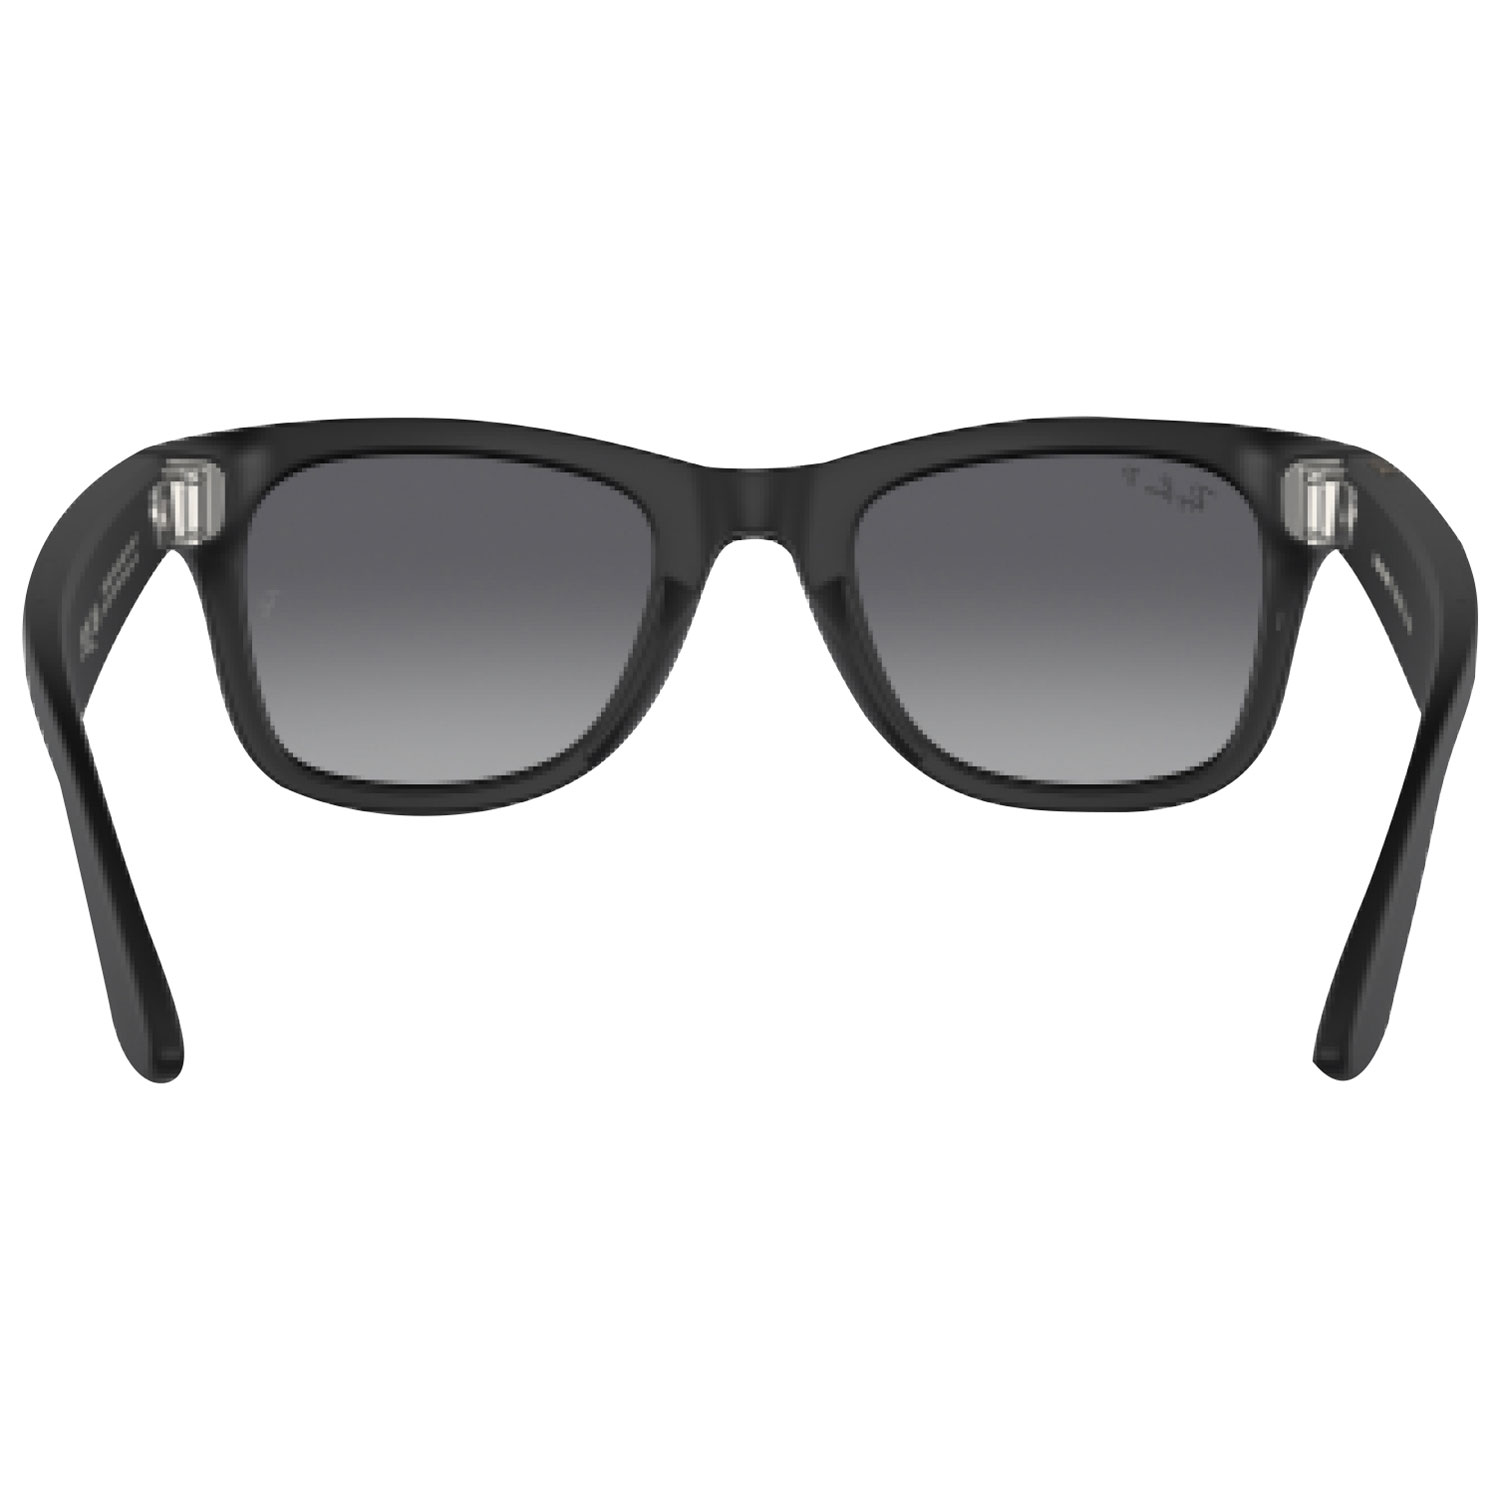 RAY-BAN, META WAYFARER Sunglasses in Black and Green 